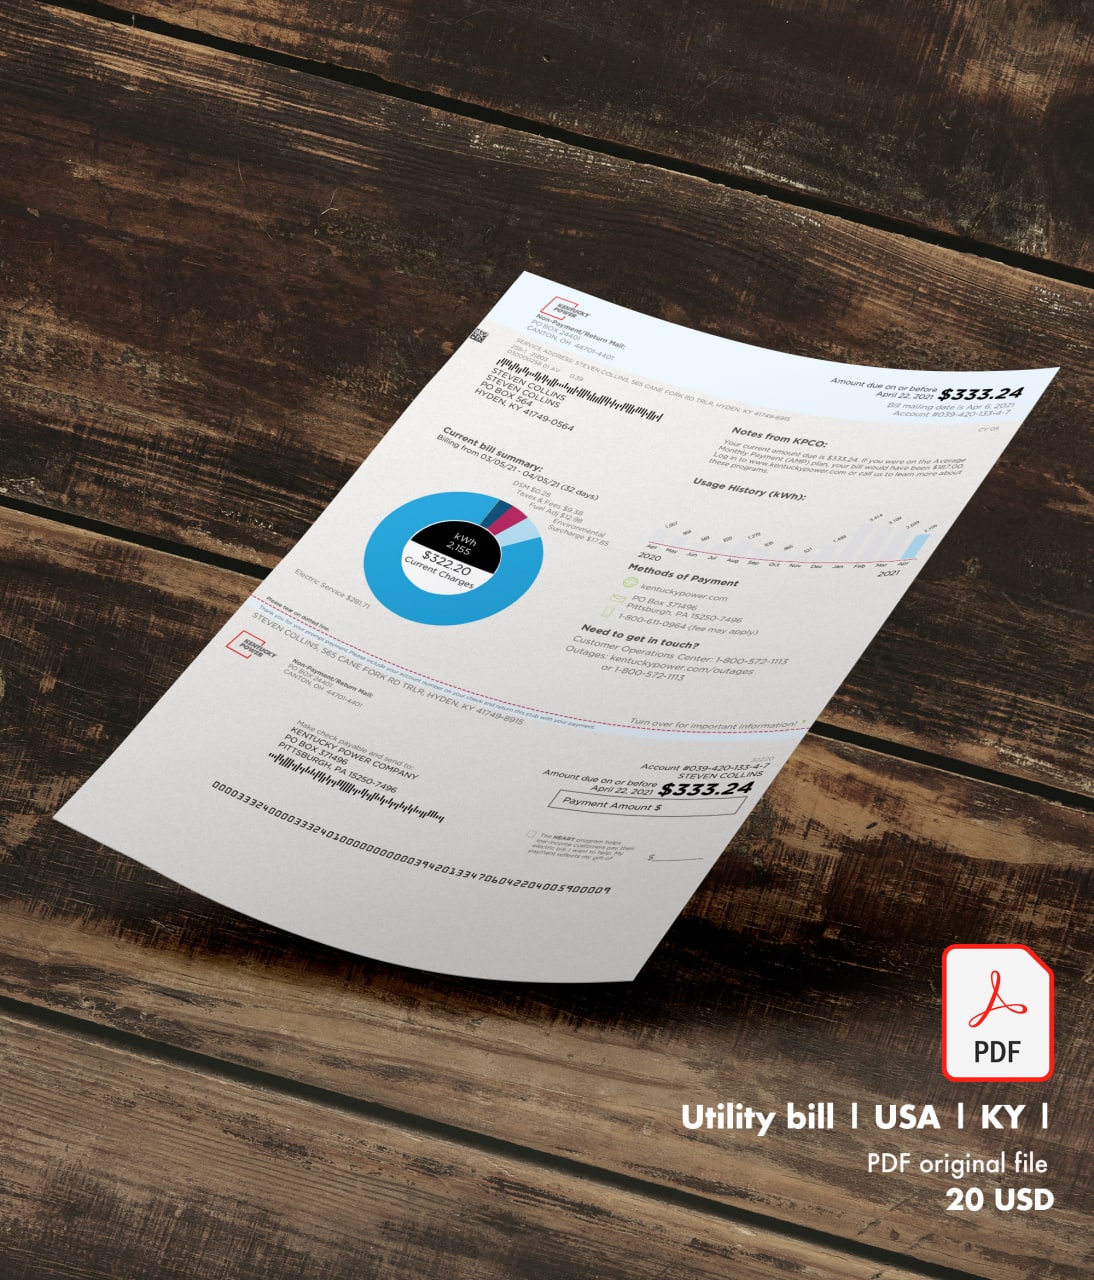 Utility bill | Kentucky Power | USA | KY-0